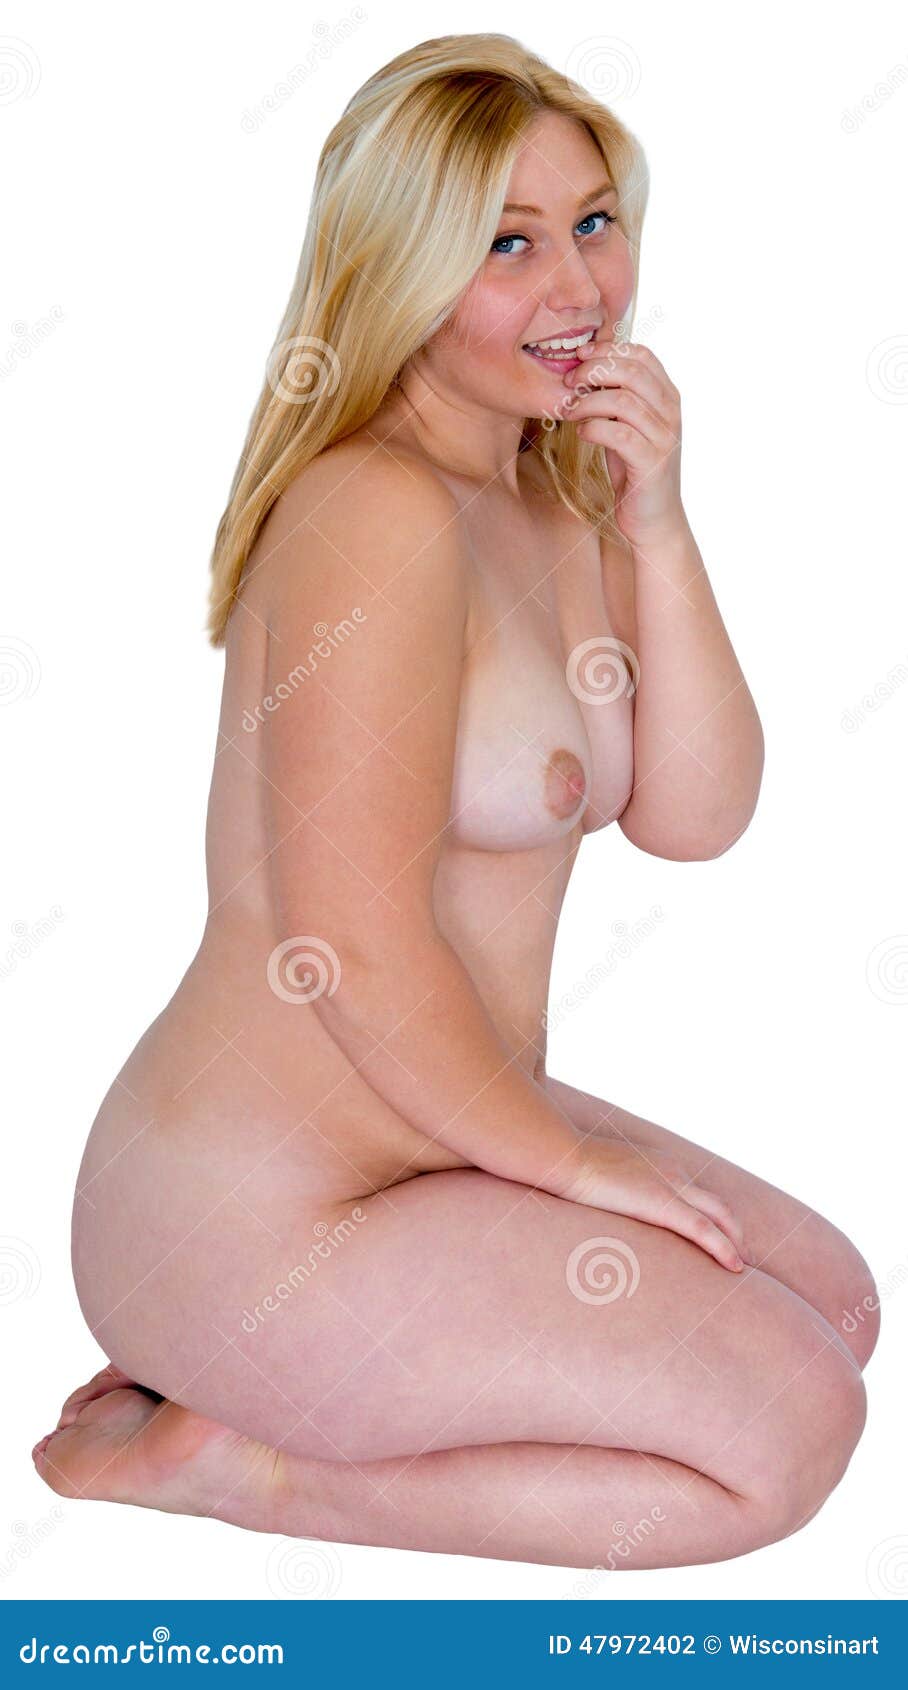 nude photos of blonde women